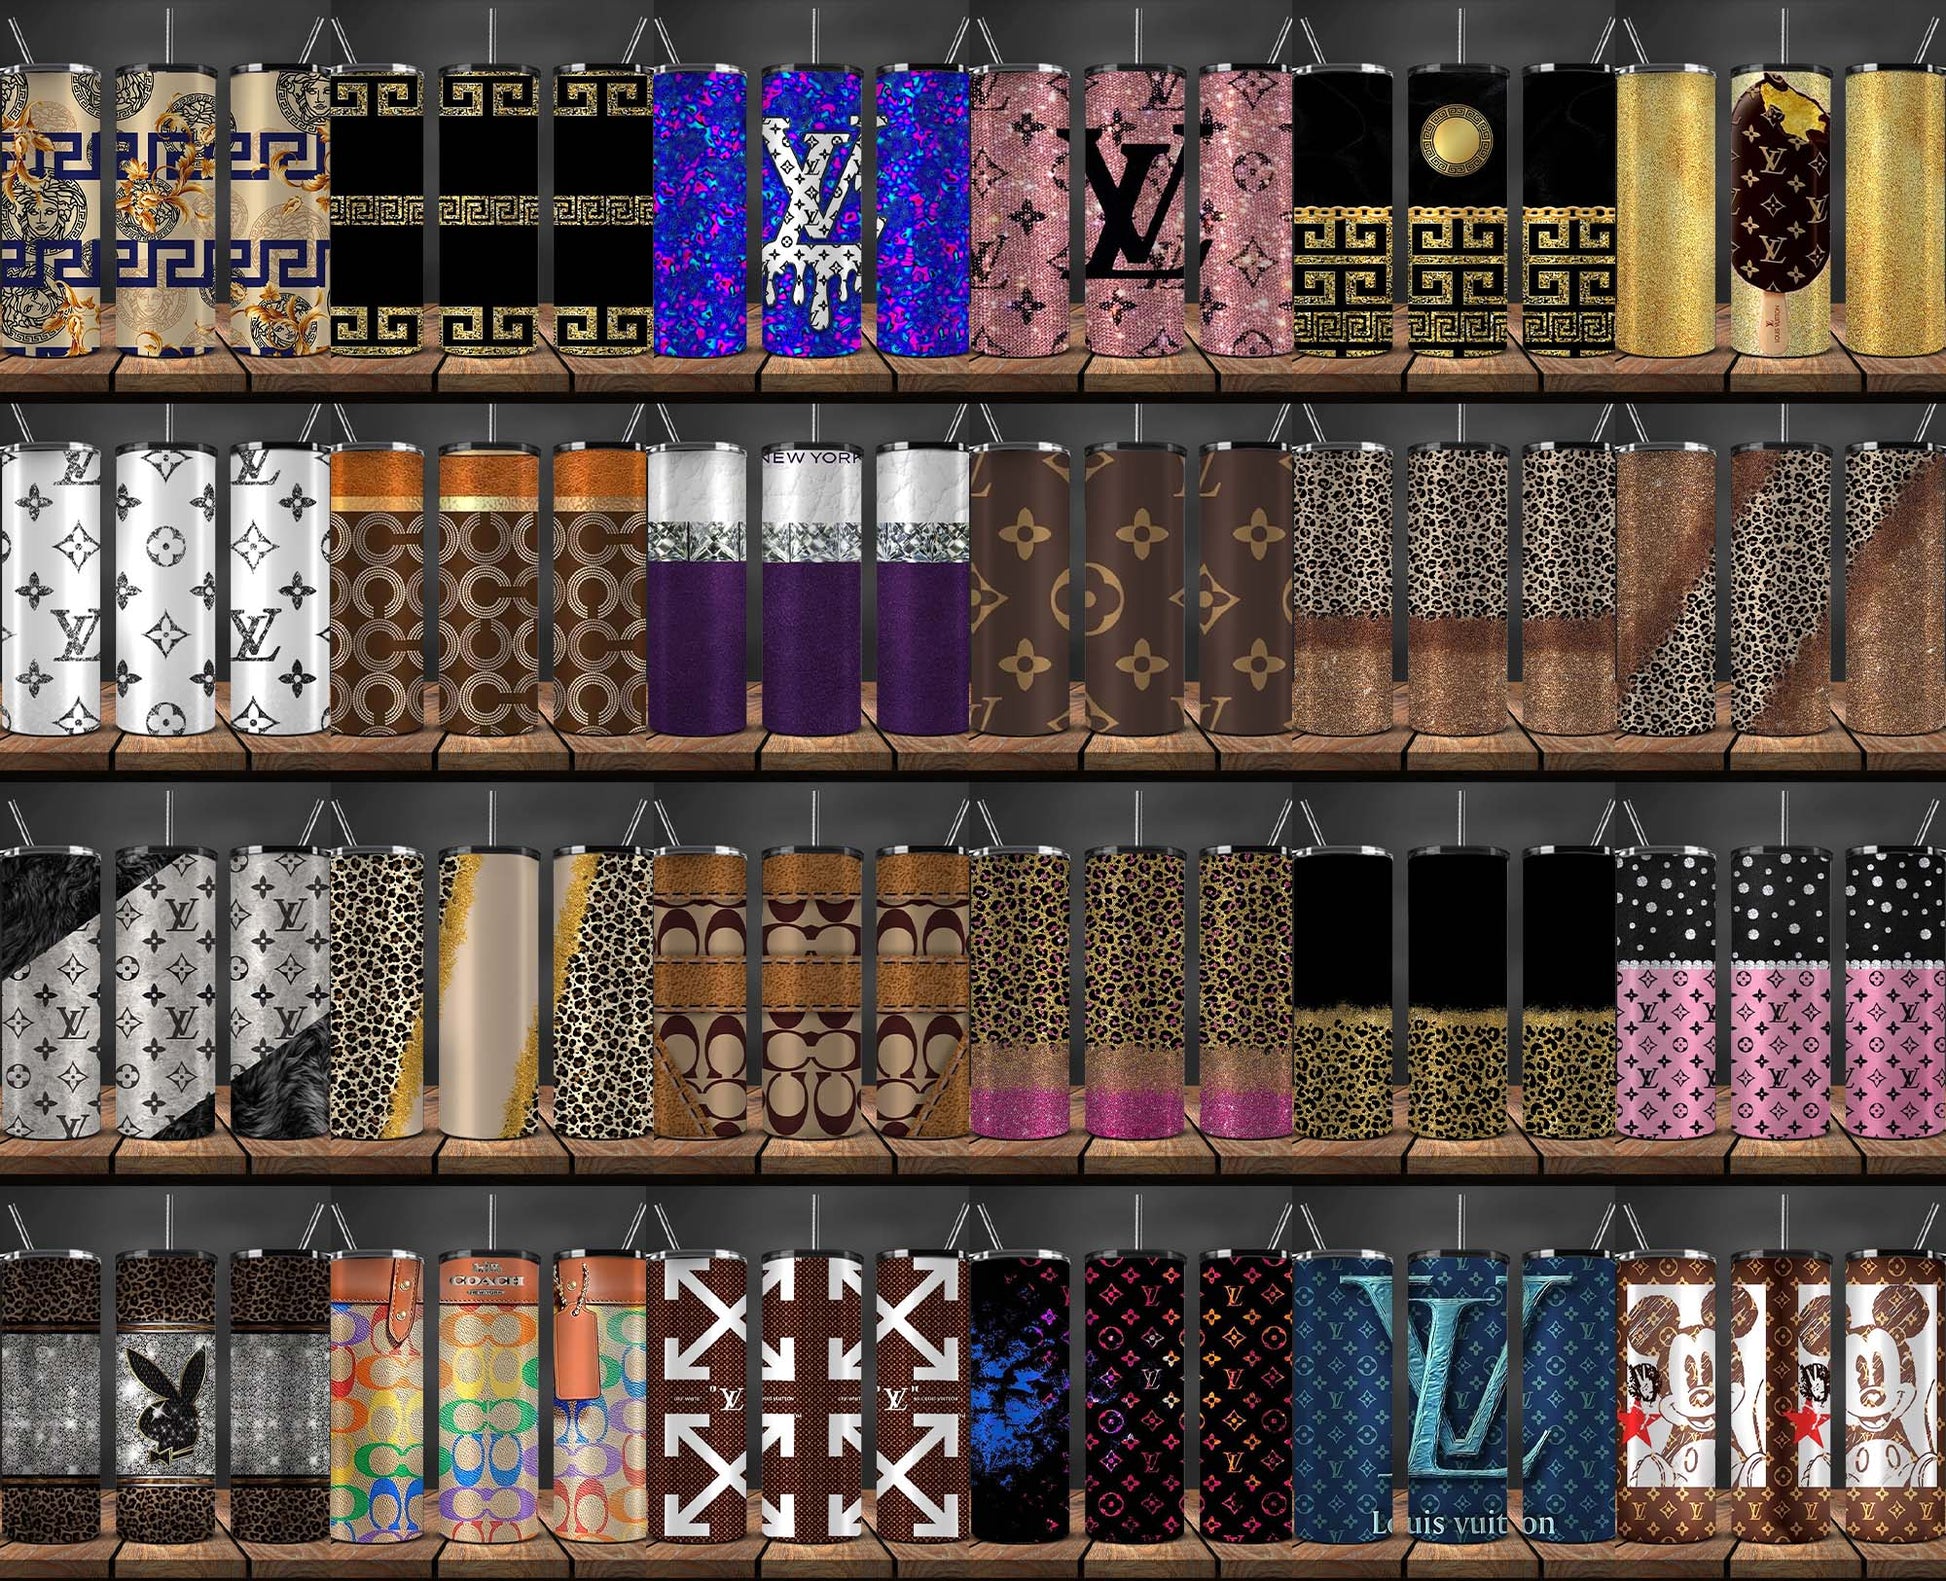 Louis Vuitton Brown Tumbler Wrap, 20oz Skinny Tumbler Design, Digital  Download